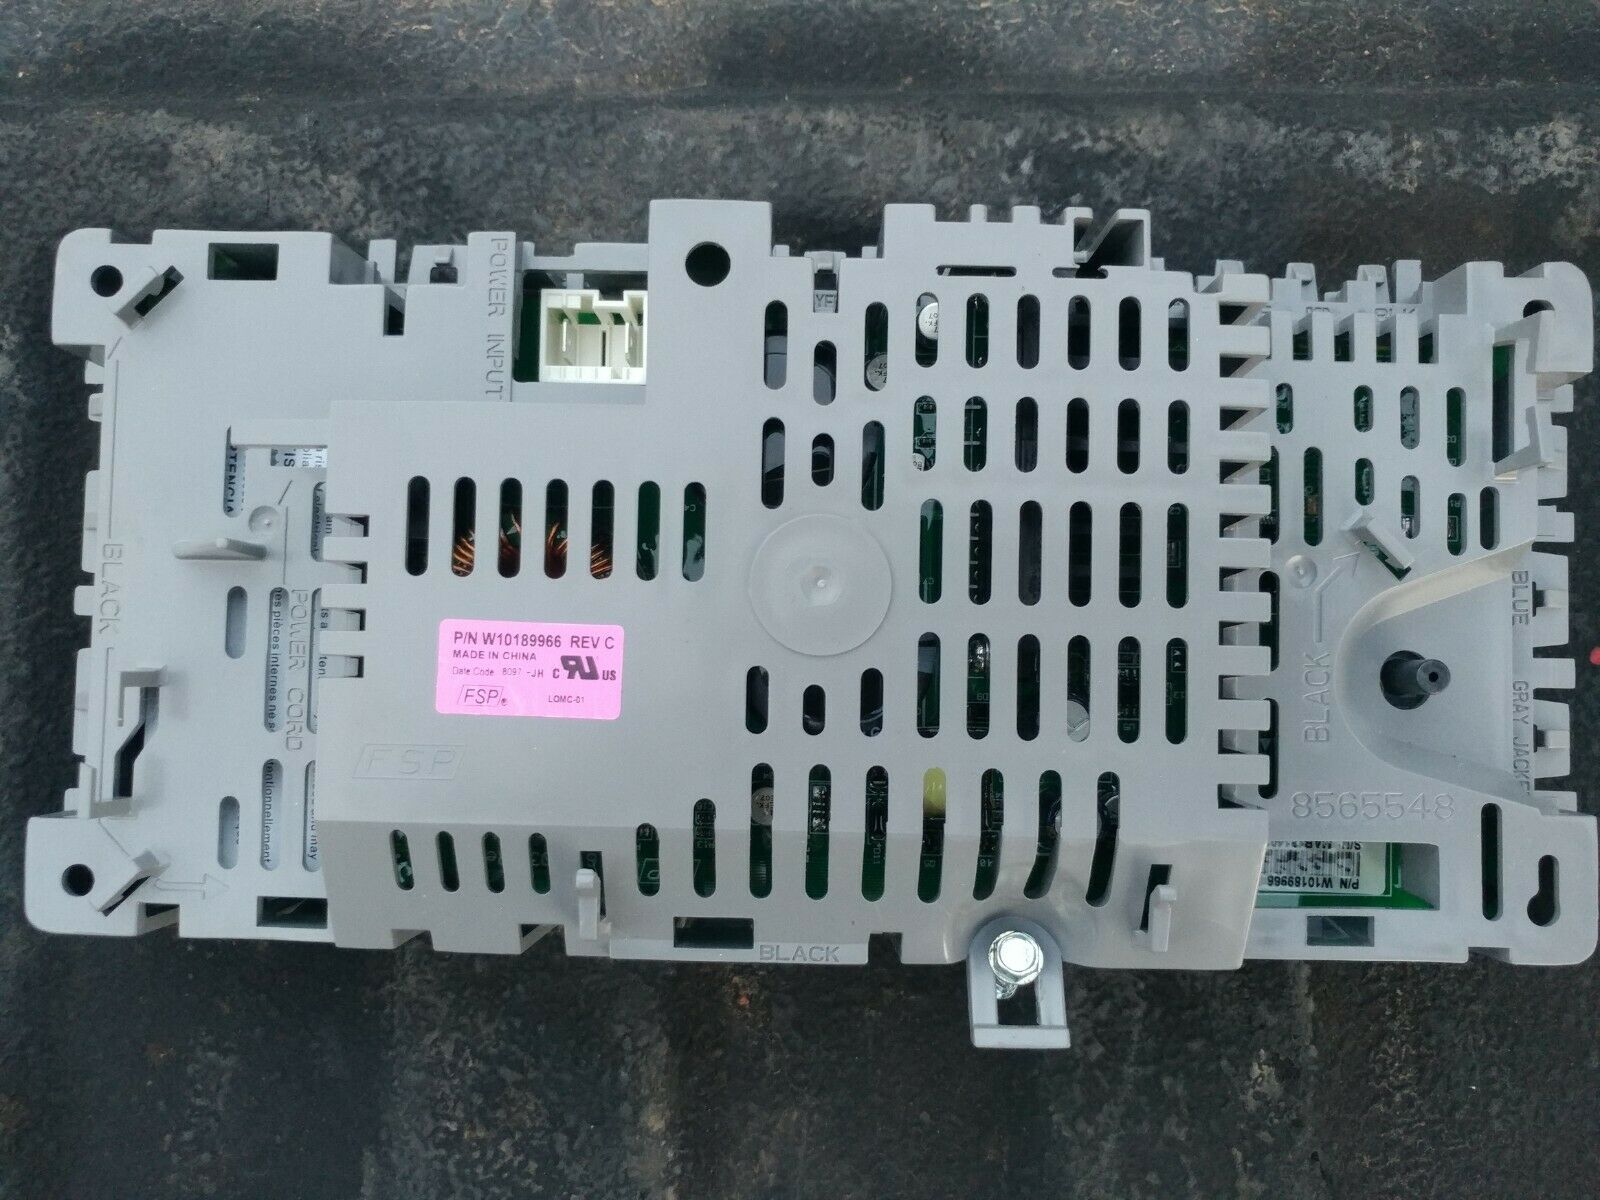 Kenmore Elite Oasis/Whirlpool Washer Main Control Board  W10189966